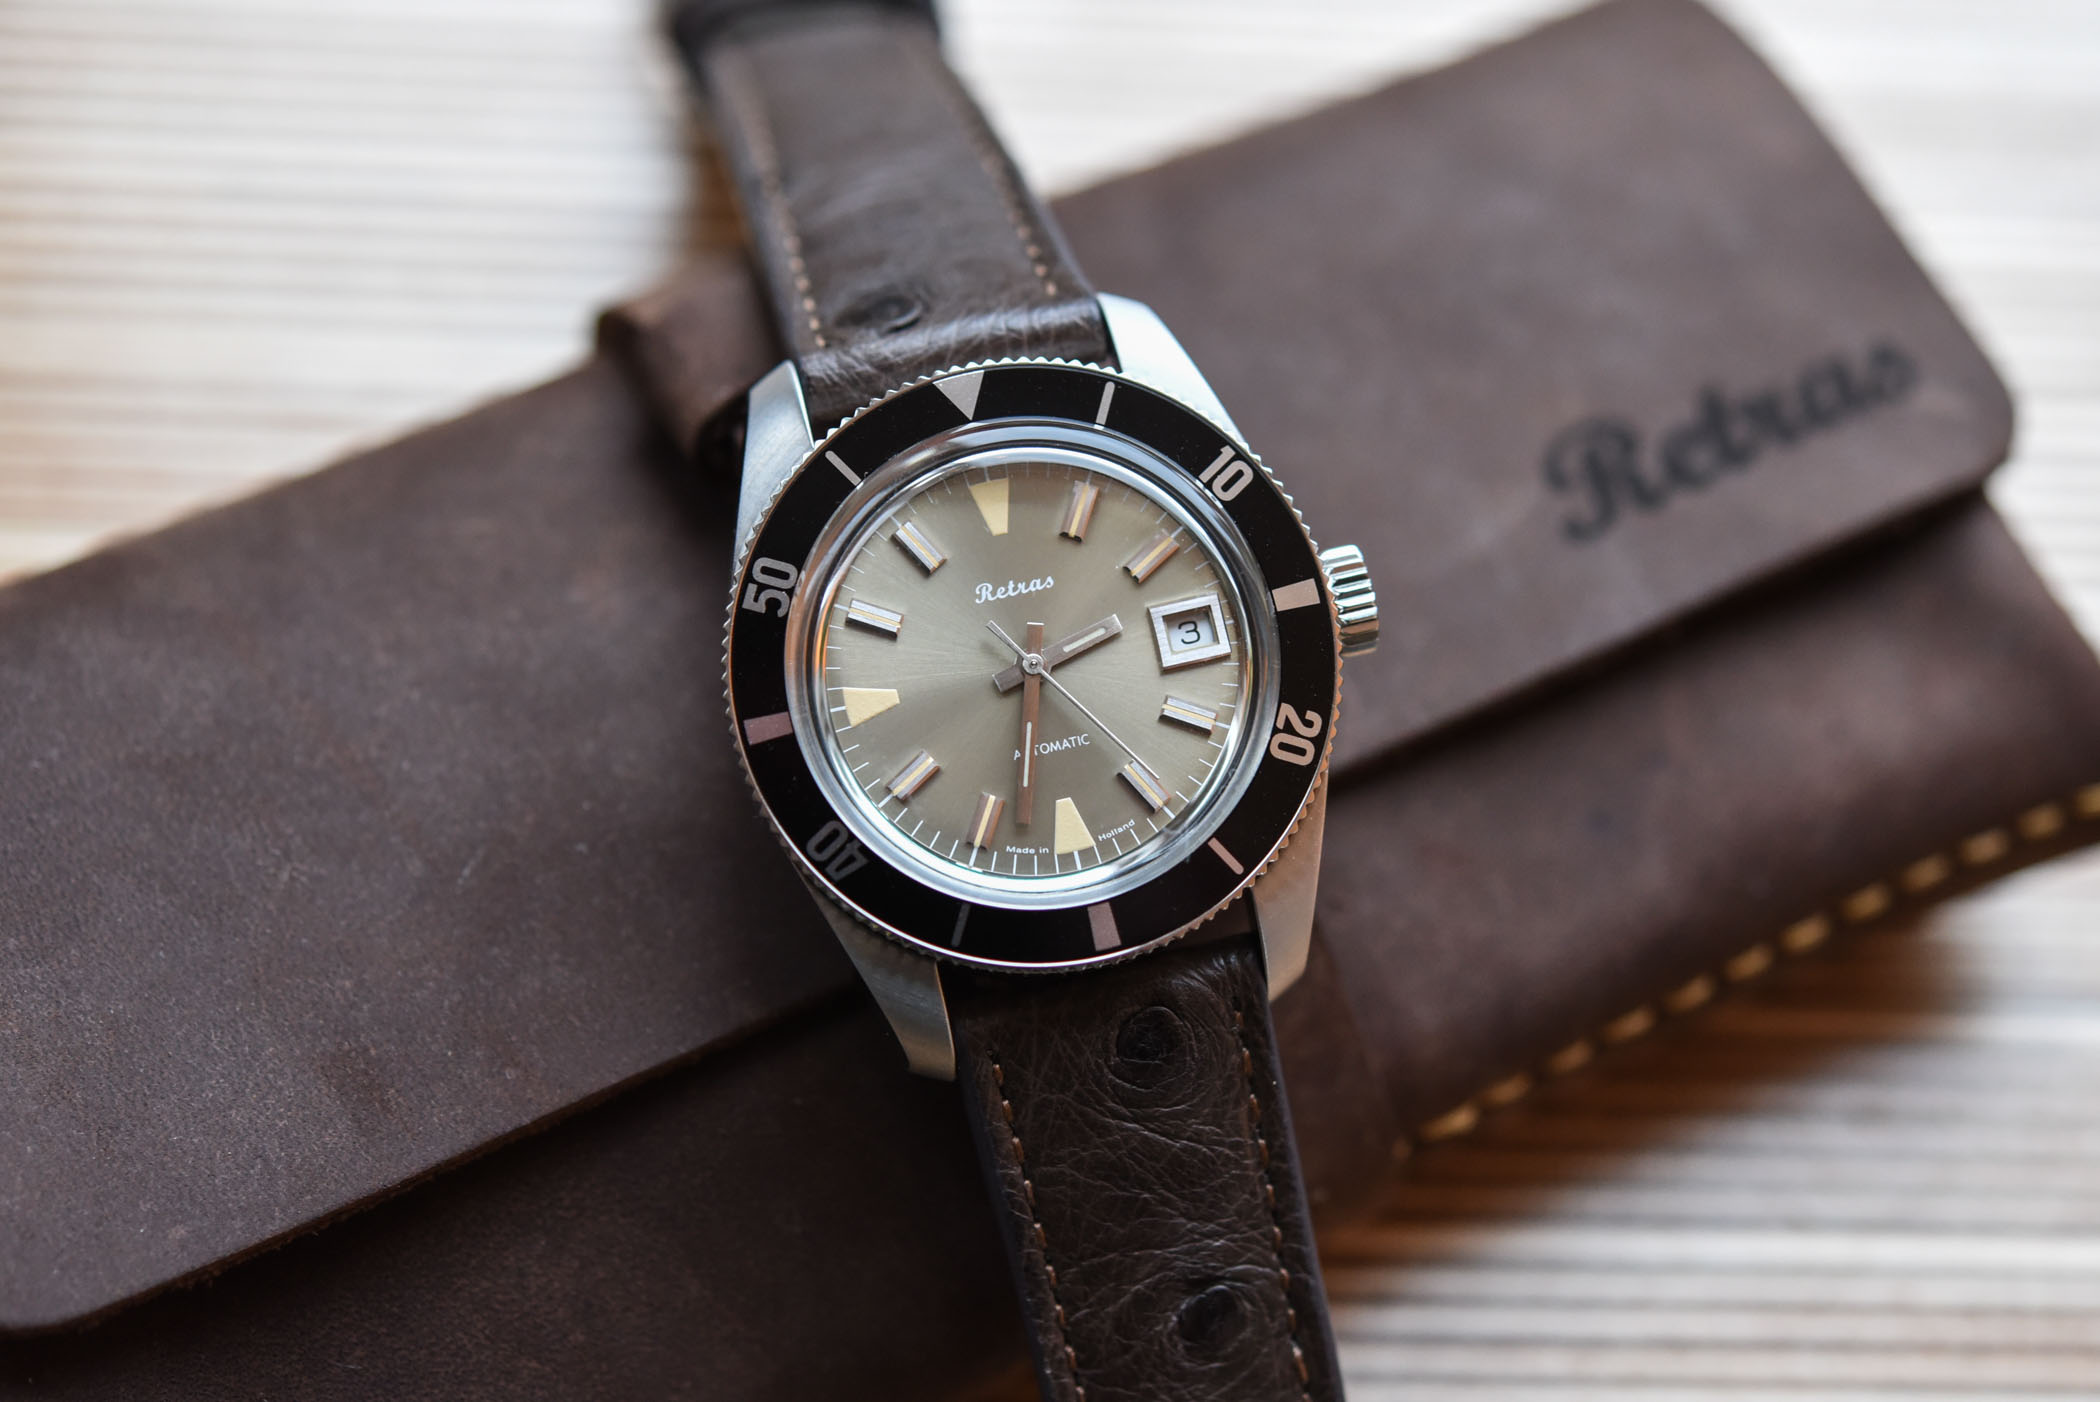 Retras Diver - Vintage Inspired Dive Watch